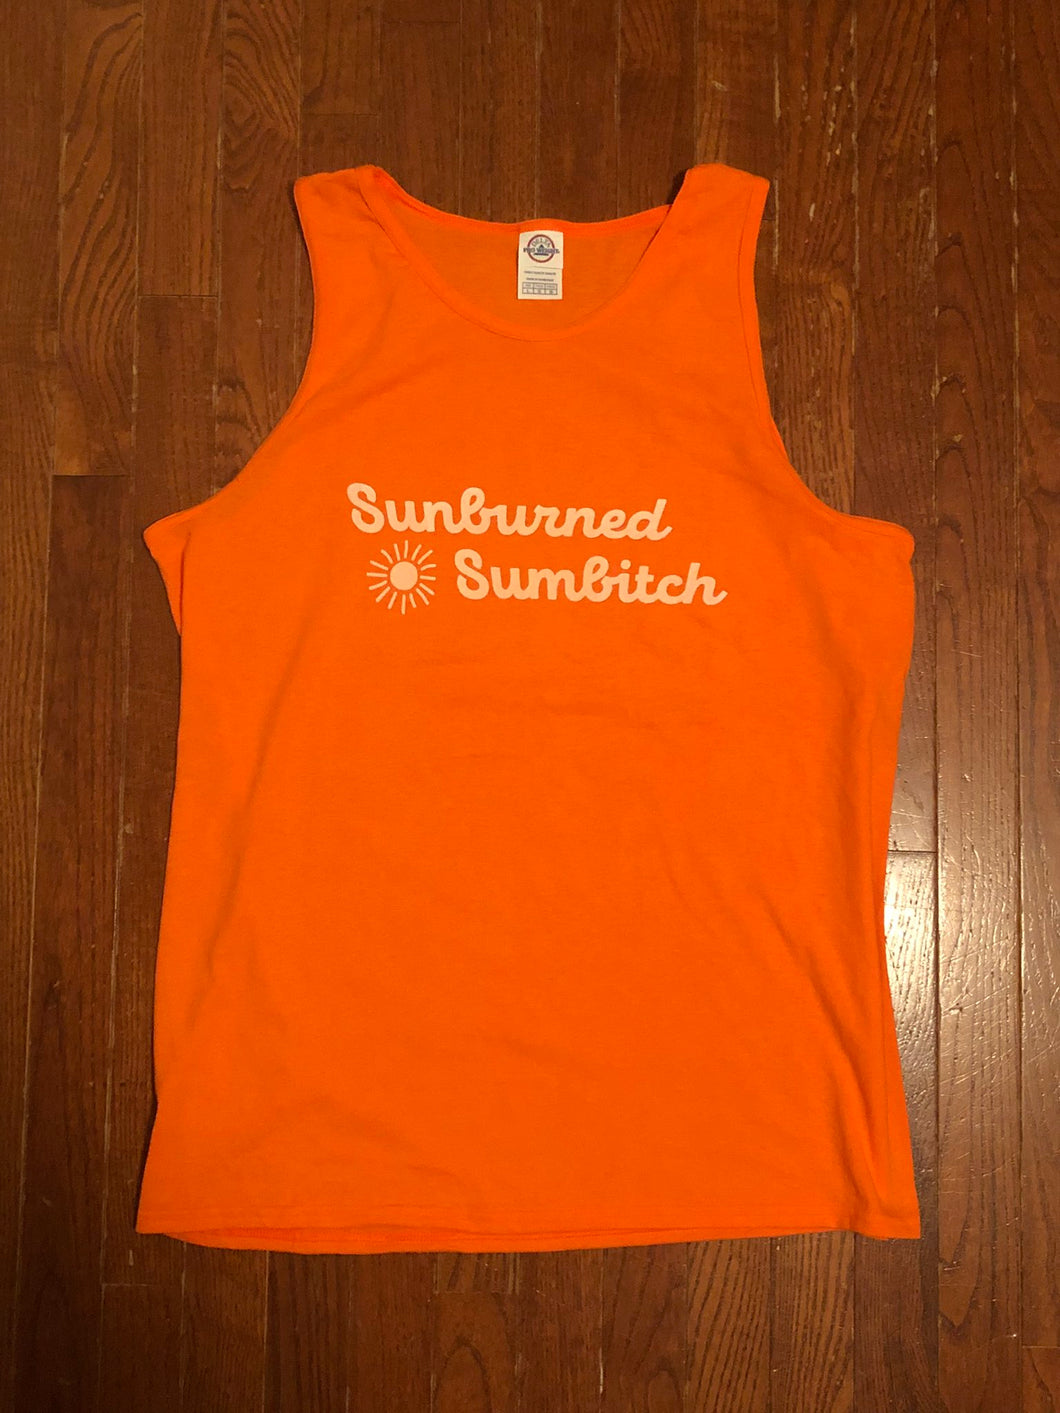 Sunburned Sumbitch (Tank)